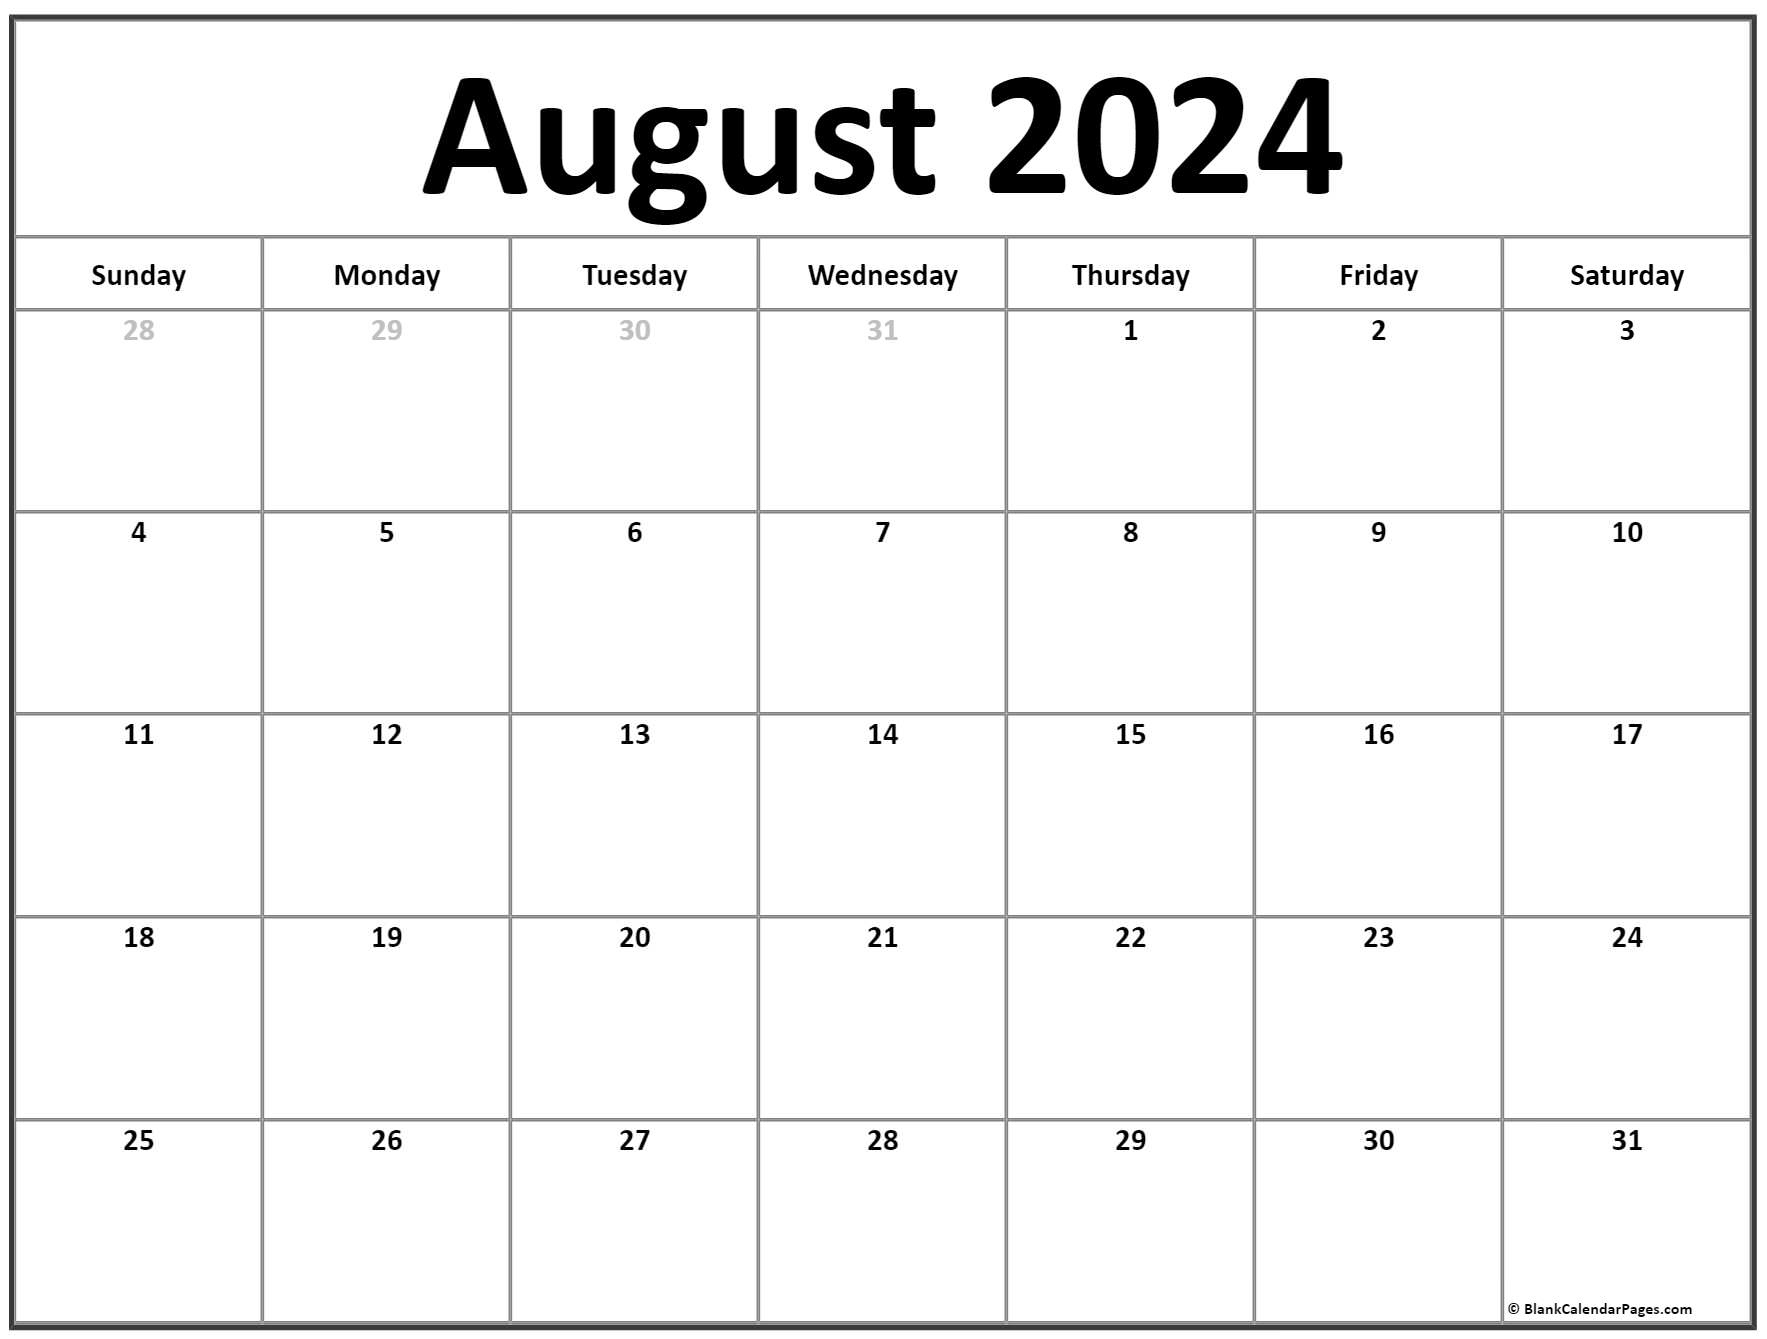 August 2024 Calendar | Free Printable Calendar regarding Free Printable Calendar August 2024